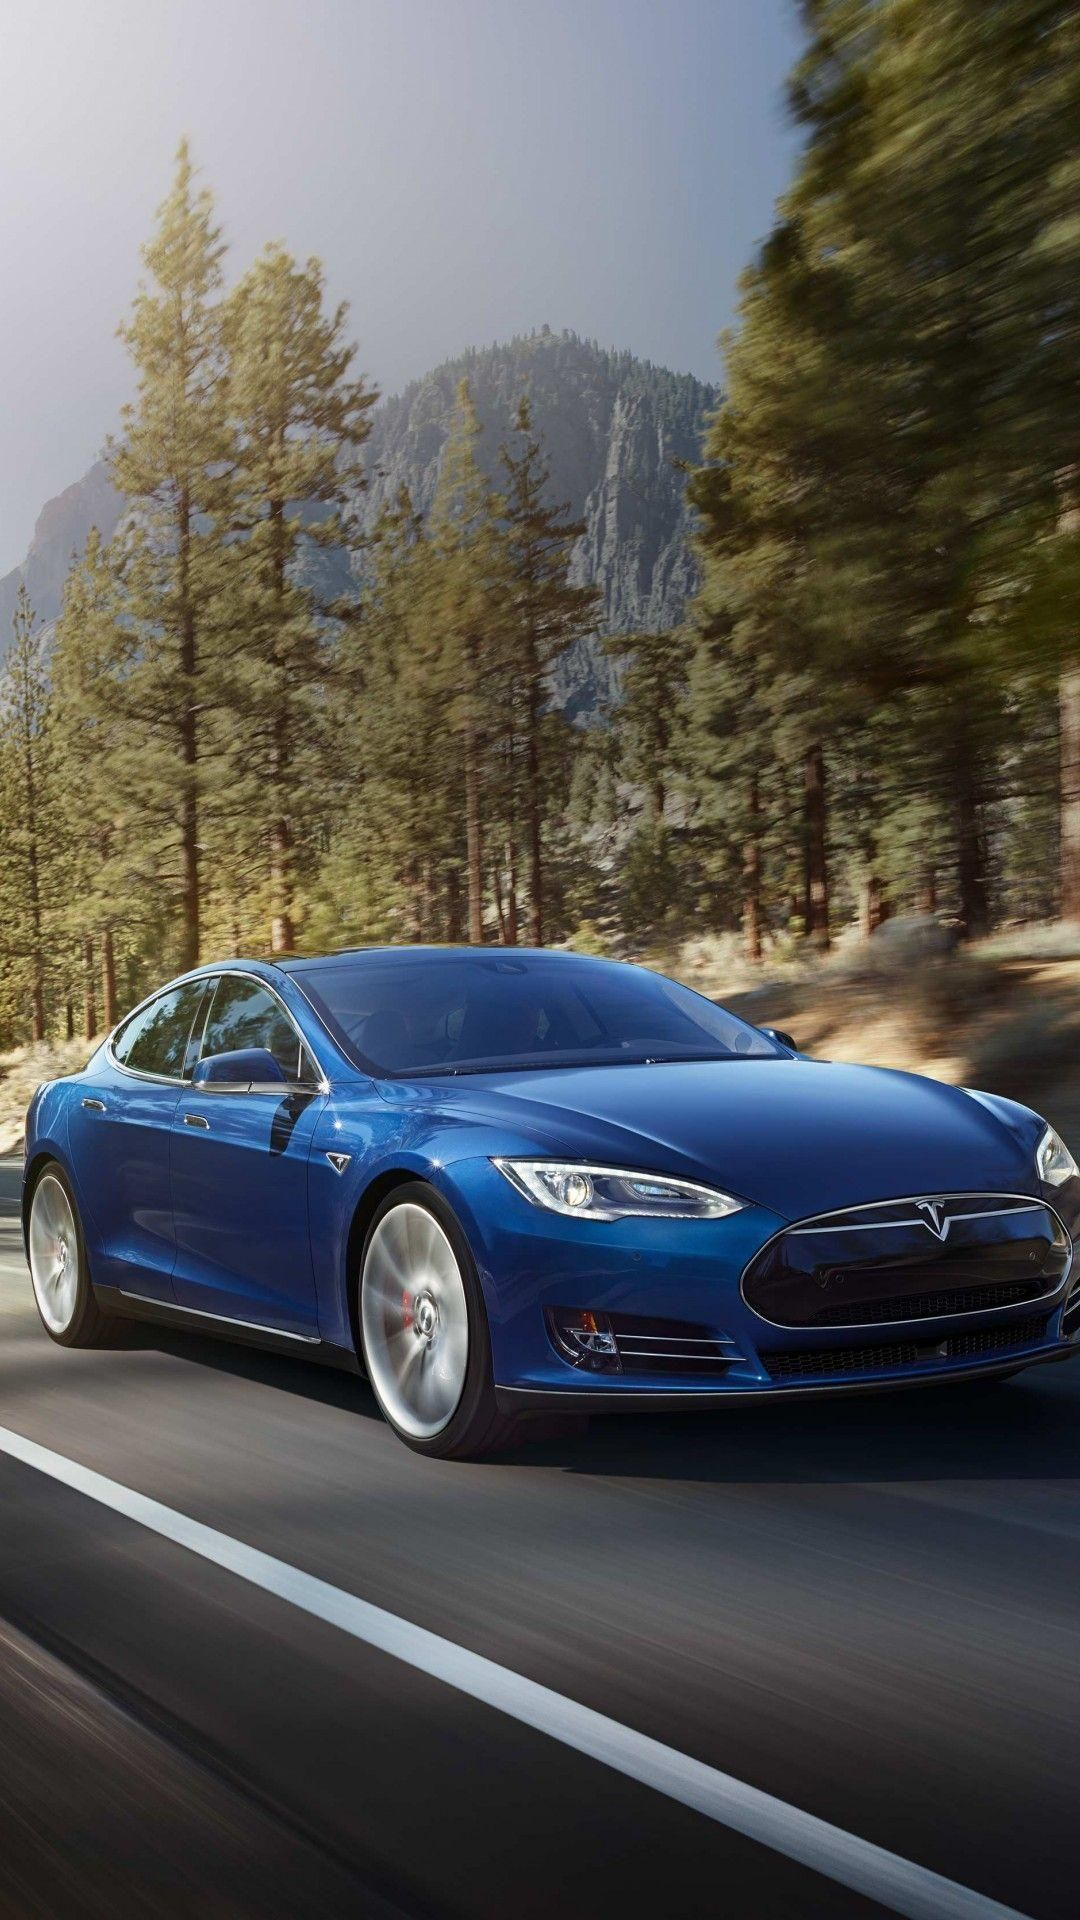 1080x1920 HD Tesla Wallpaper Explore more American, California., Car, electric, Electric car company wallpaper. ;&#128;&brvbar; | Tesla model s, Tesla, Tesla model